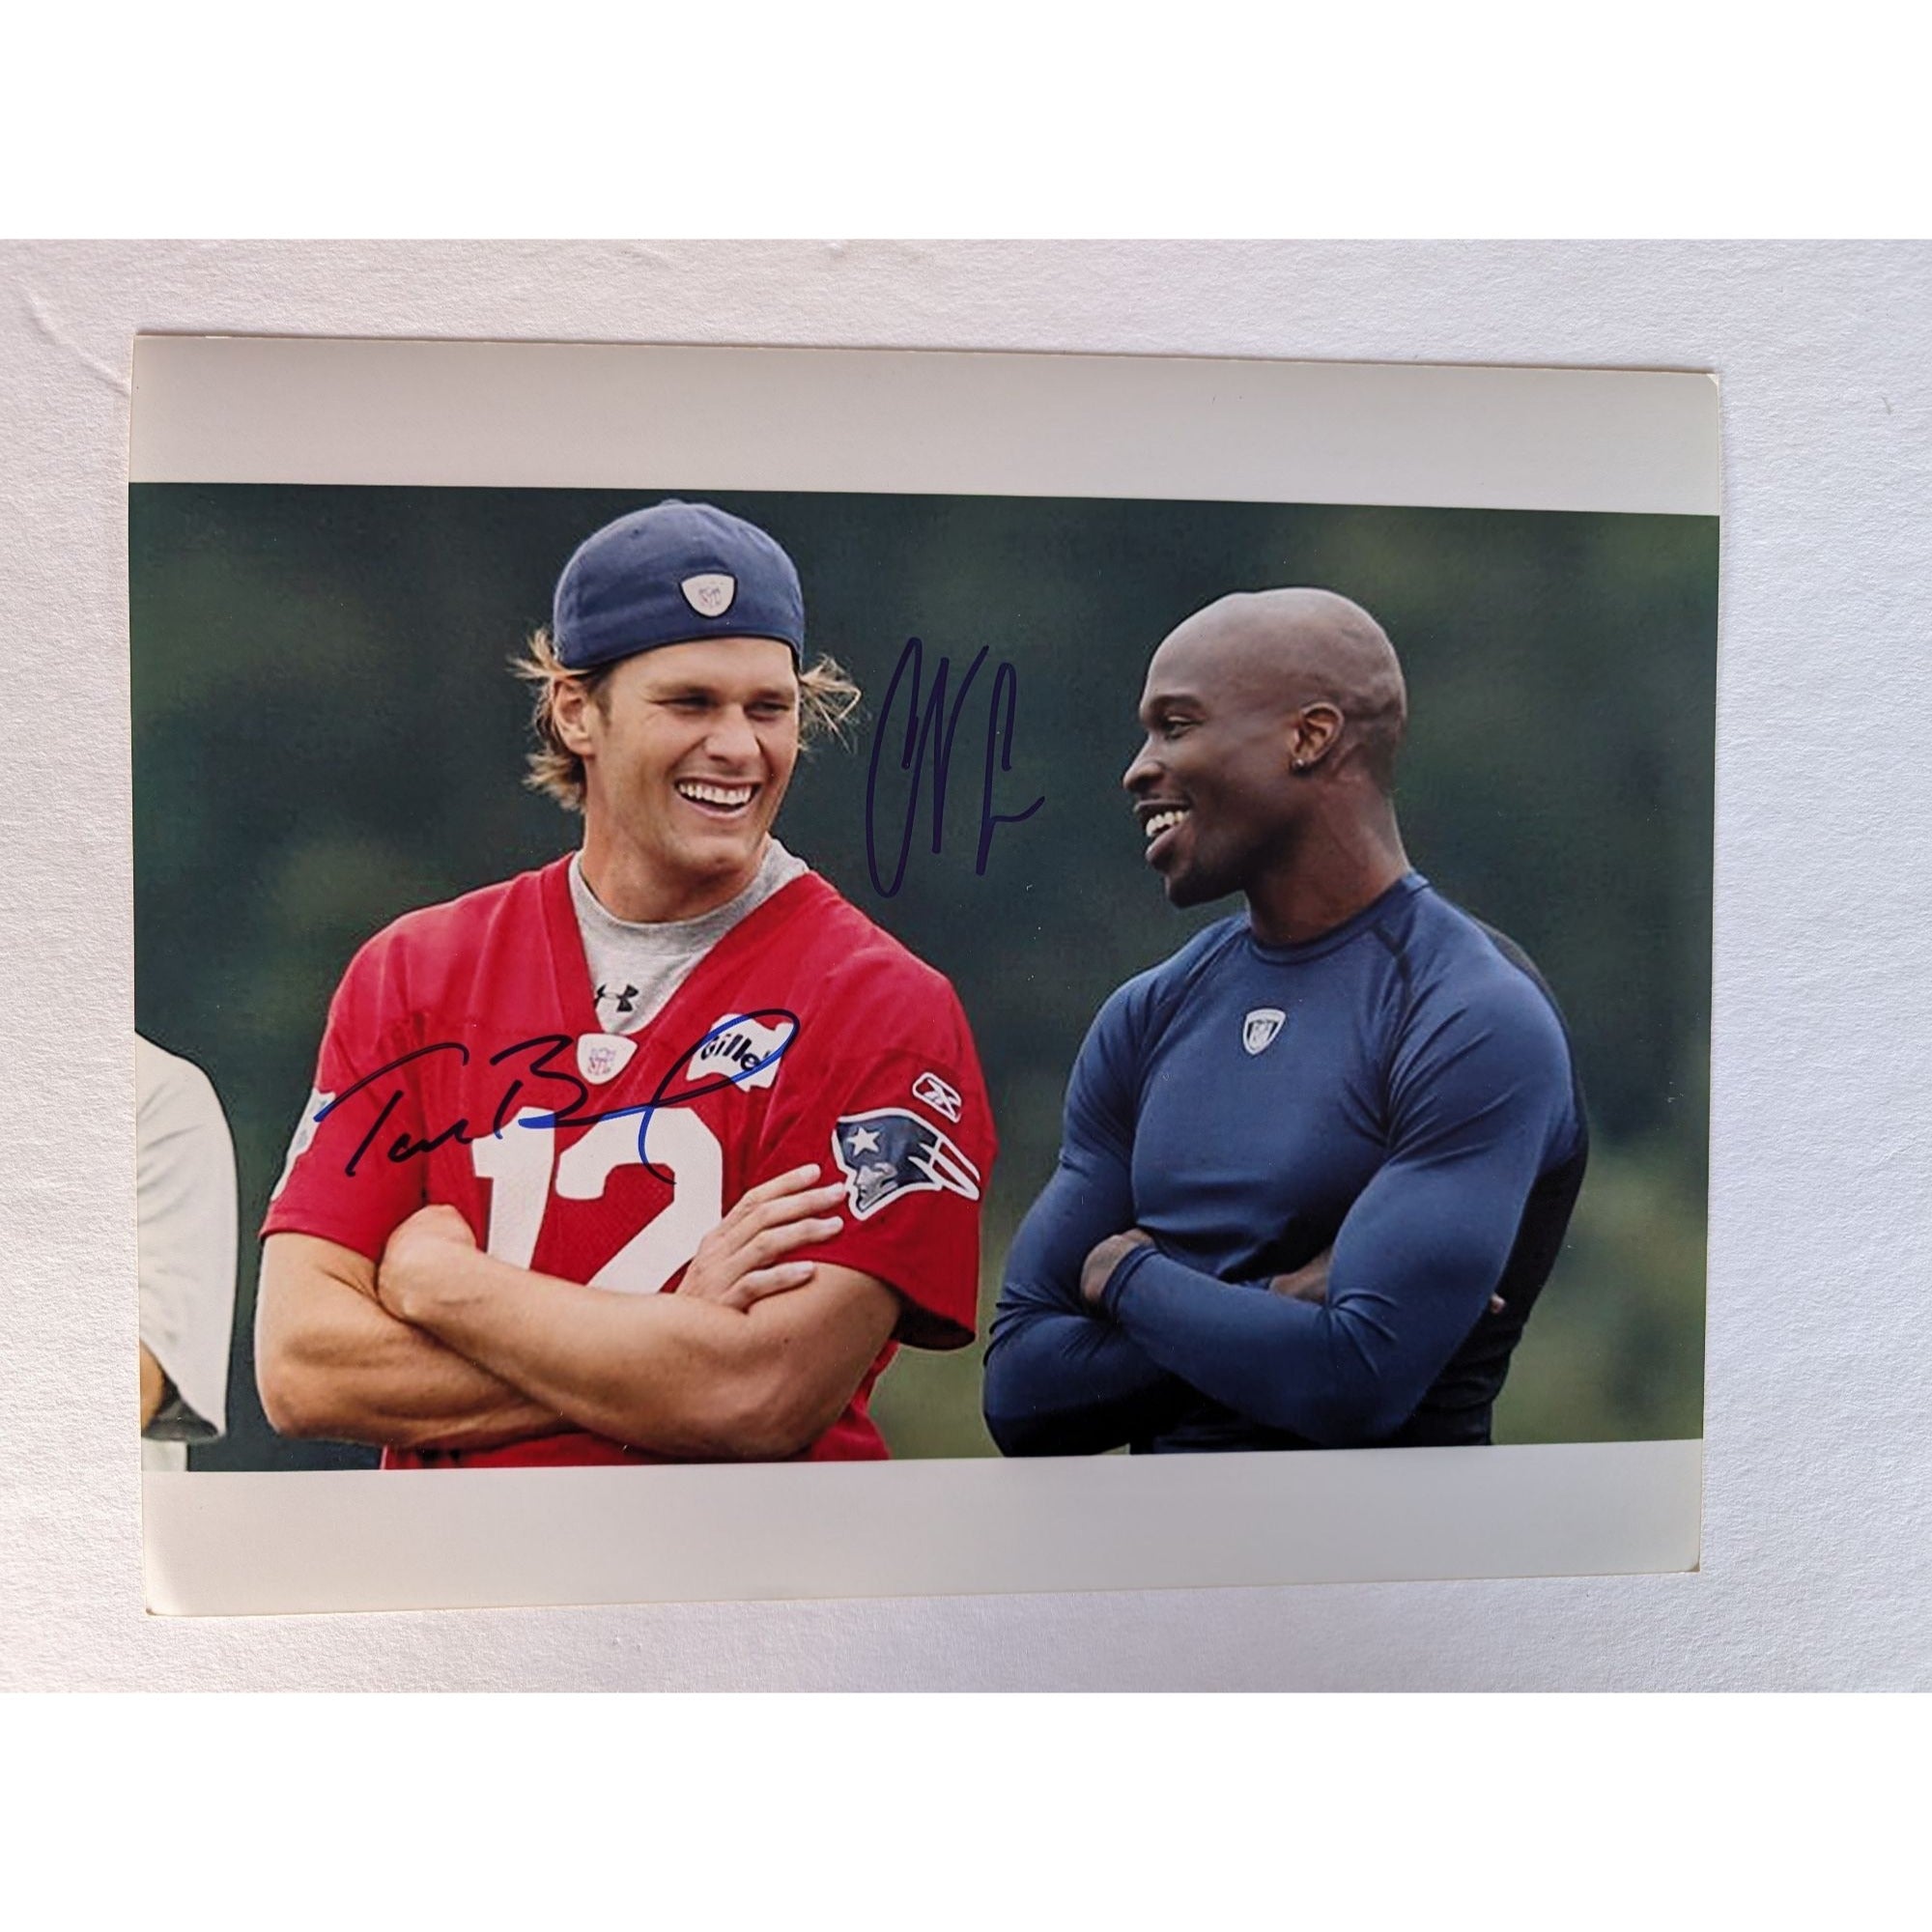 Tom Brady and Chad Ochocinco Johnson 8x10 photo signed with proof